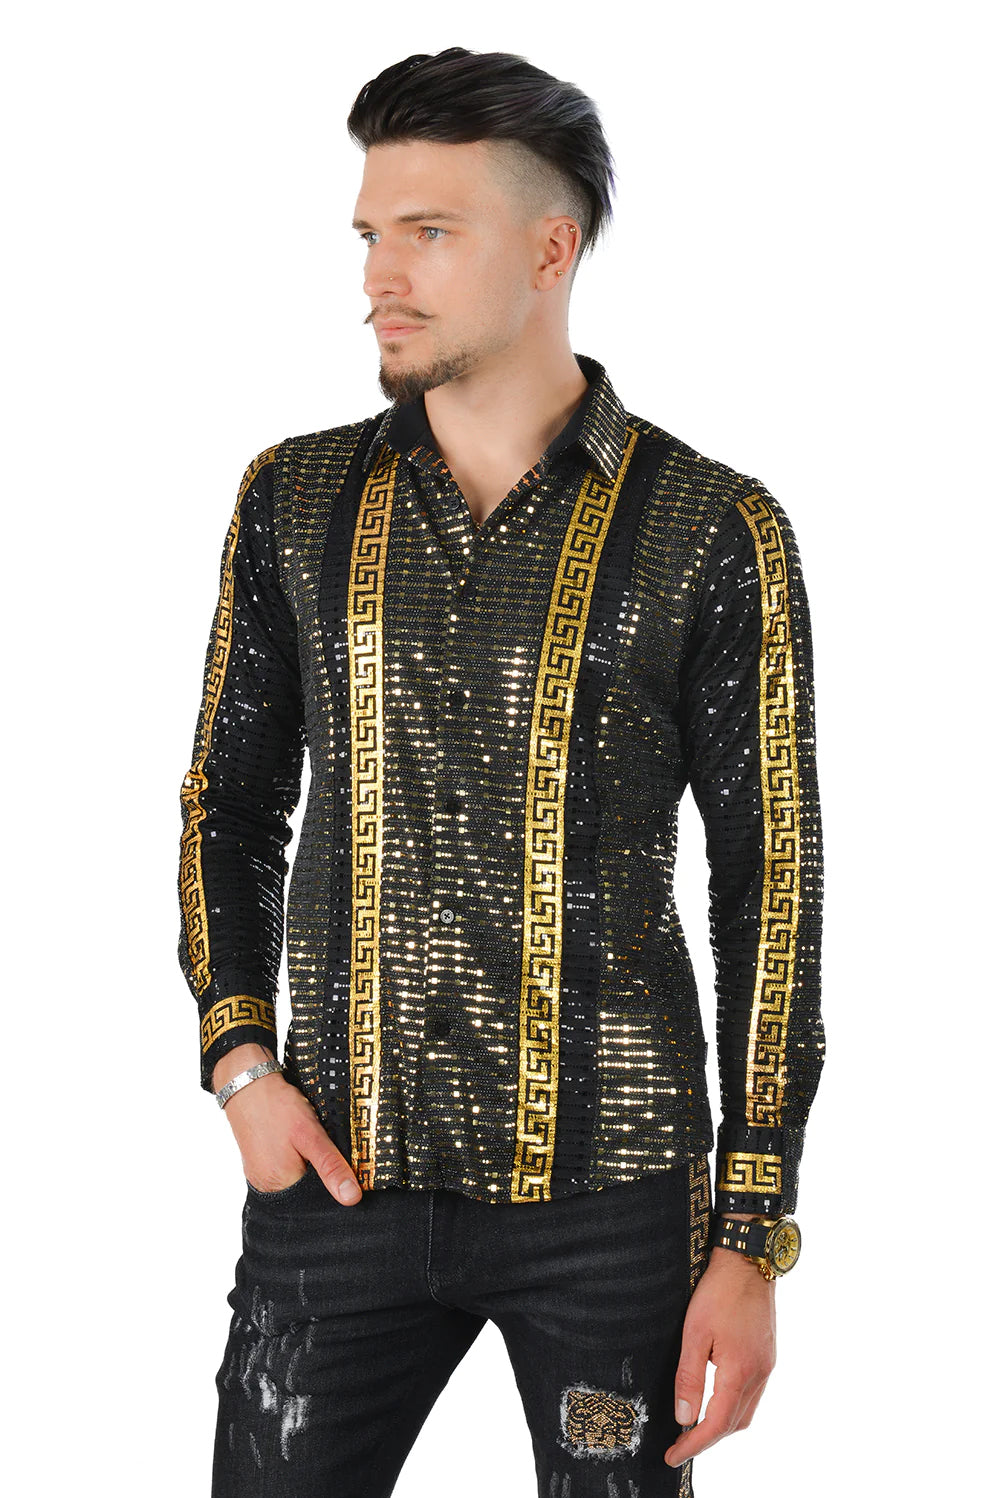 La Greca Gold and Black Two-Tone Greek Key Pattern Long-Sleeve Shirt SHIRTS Barabas Collection Vercini